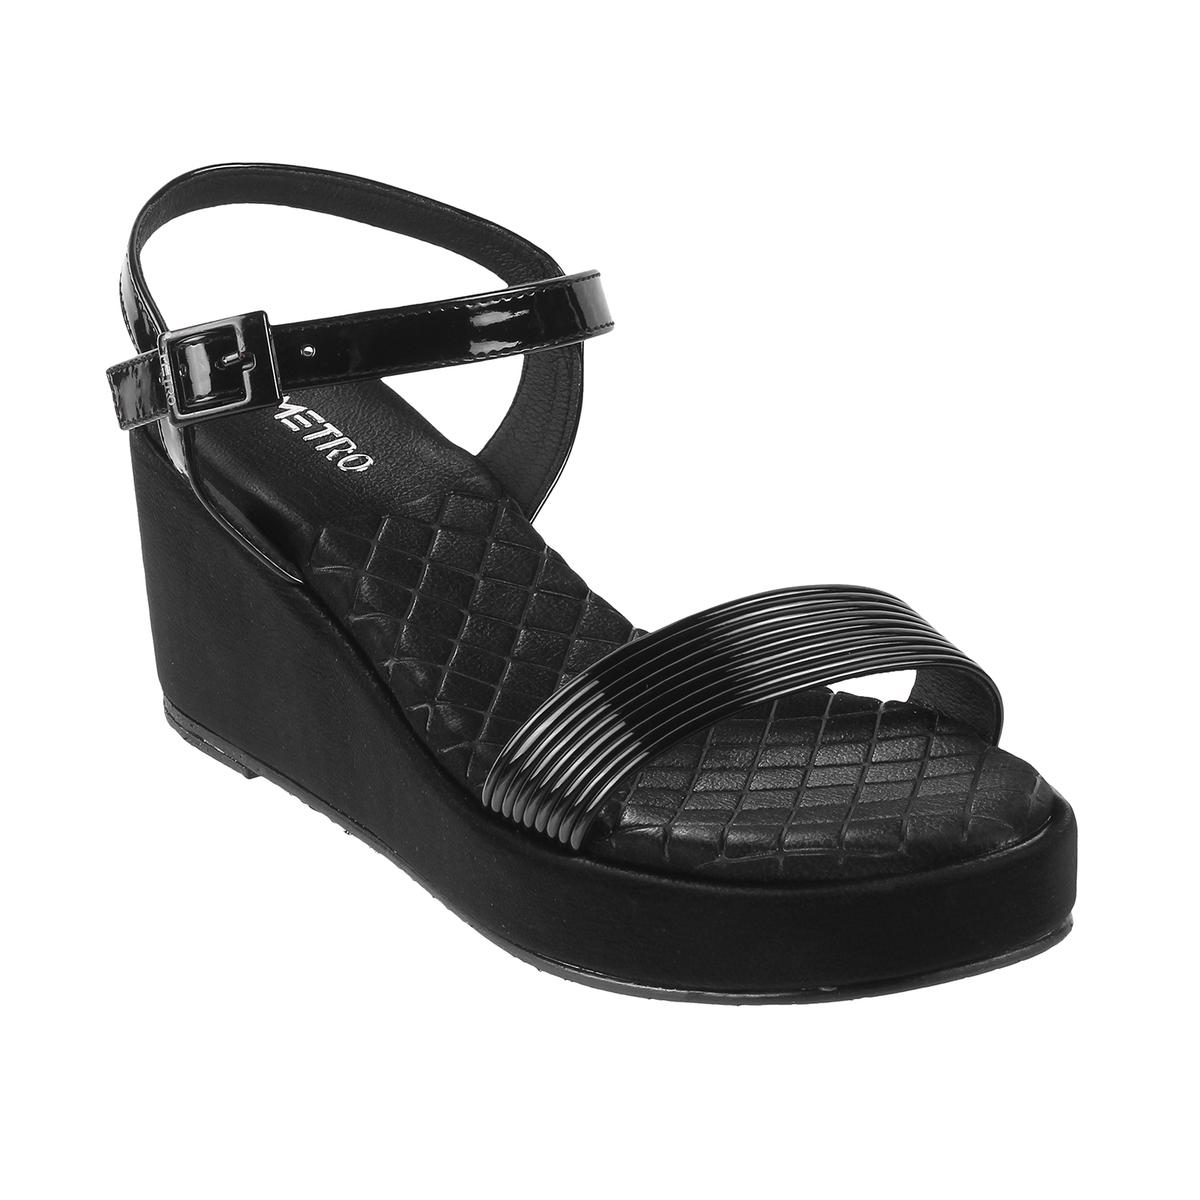 Buy Puma Cruise Comfort Black Casual Sandals online